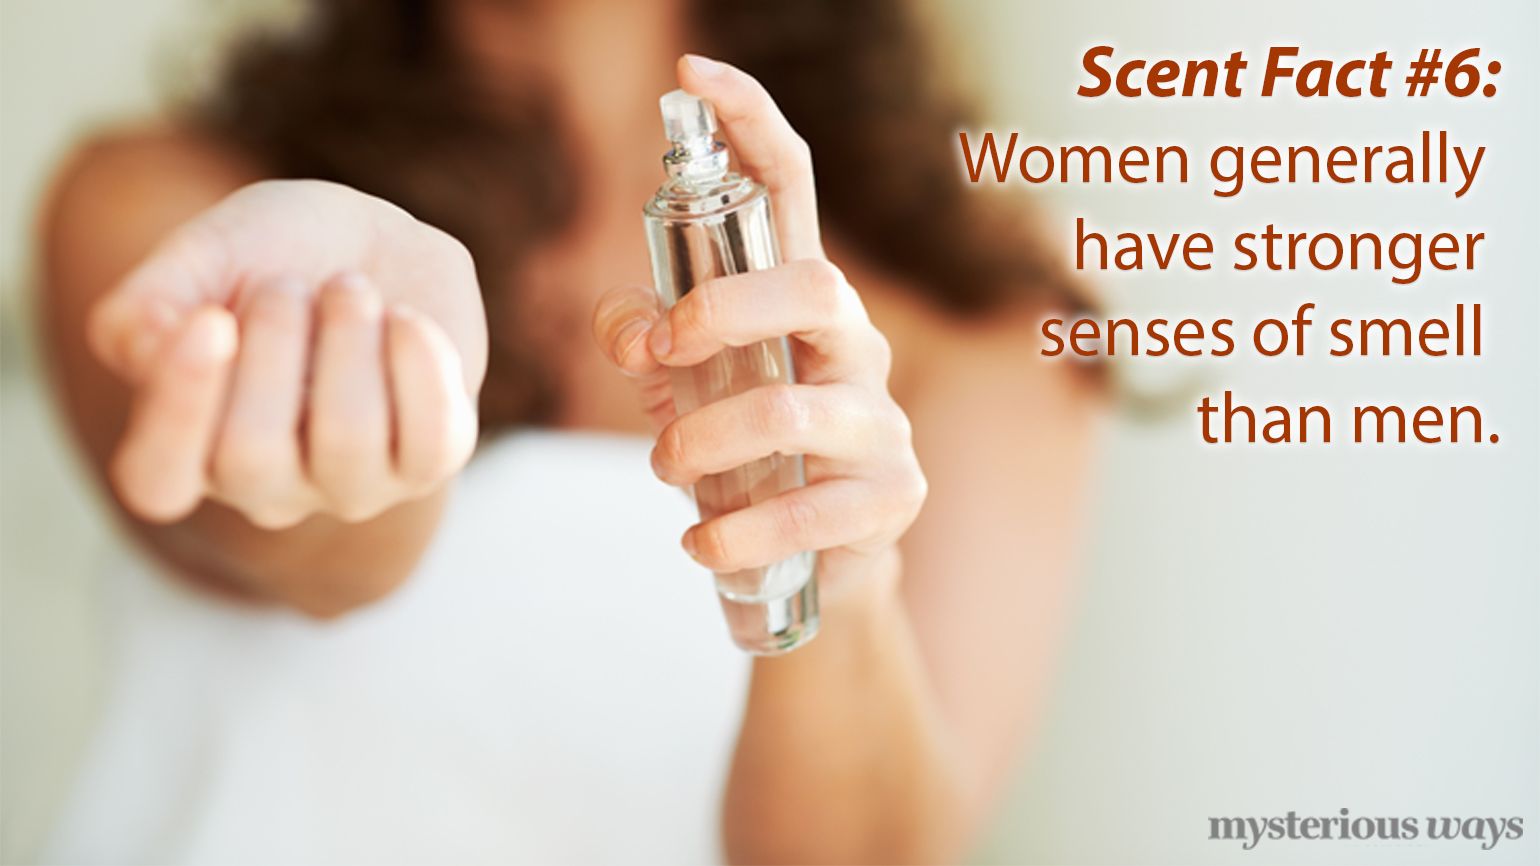 Women generally have stronger sense of smell than men